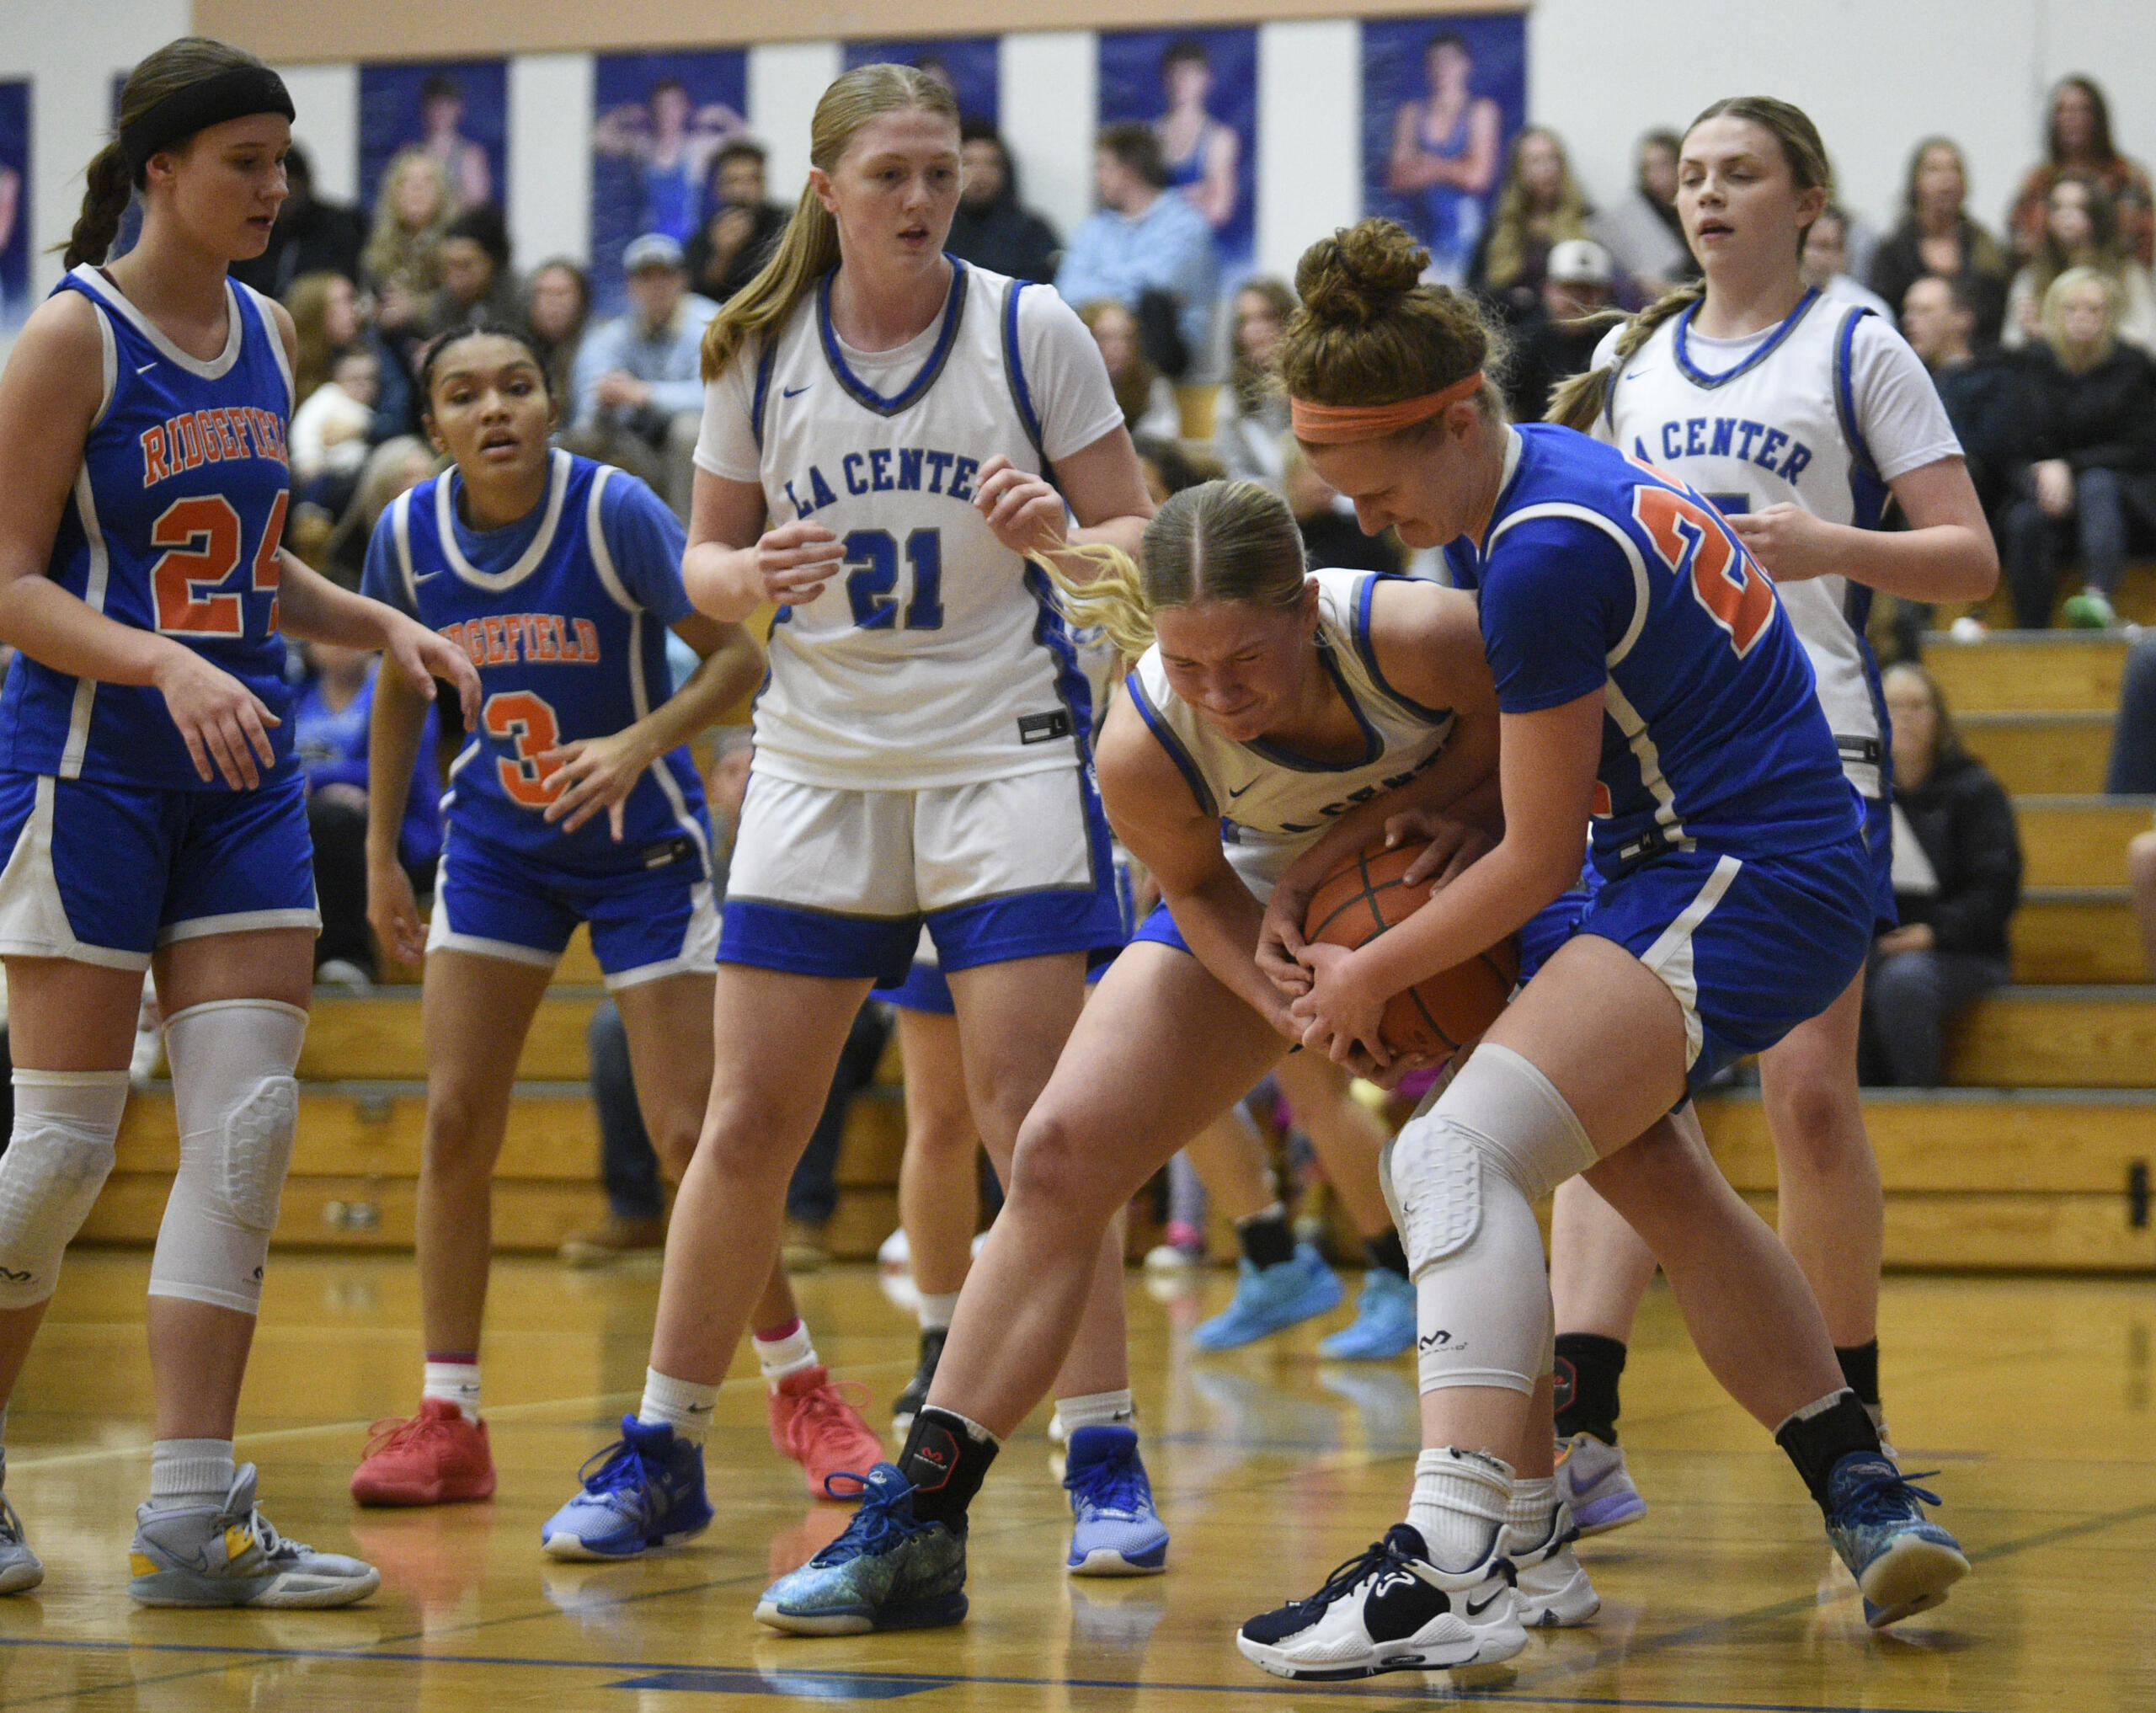 Girls Basketball: Ridgefield vs. La Center photo gallery